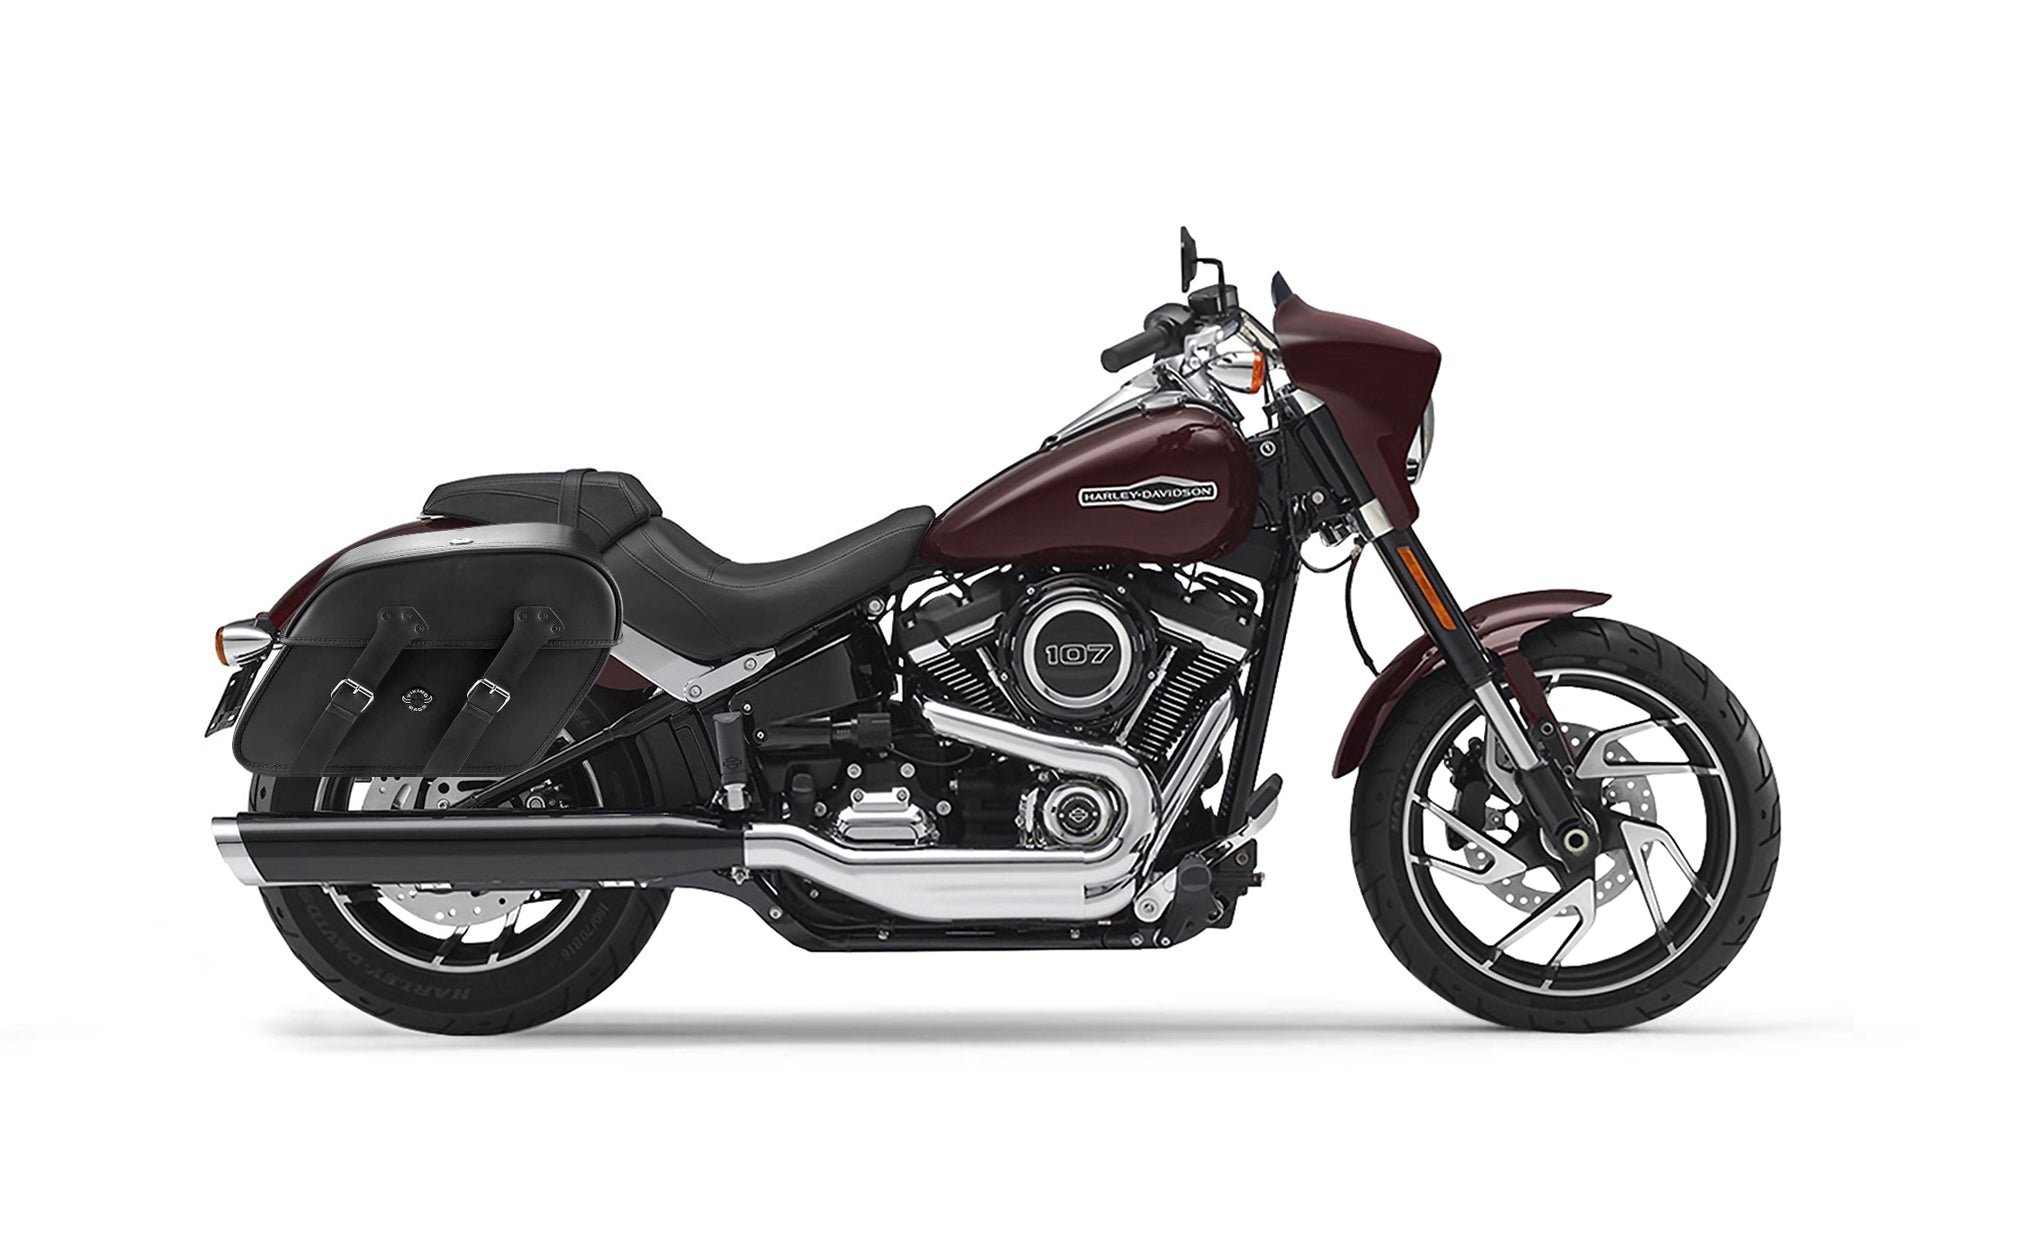 Viking Raven Extra Large Leather Motorcycle Saddlebags For Harley Softail Sport Glide Flsb on Bike Photo @expand